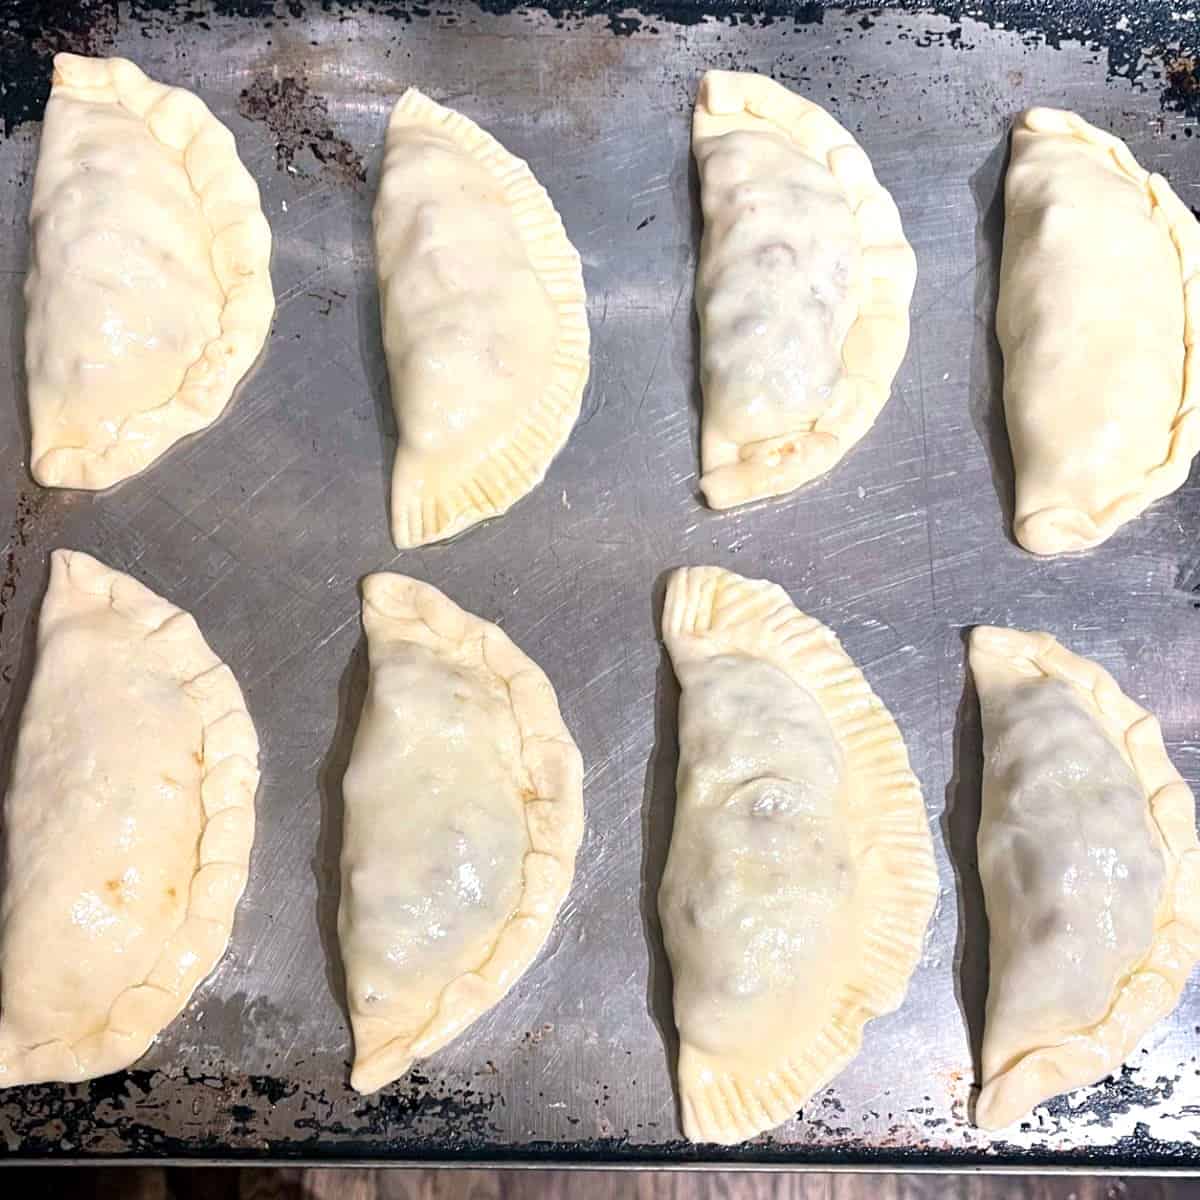 Vegan empanadas on baking sheet ready to go into oven.